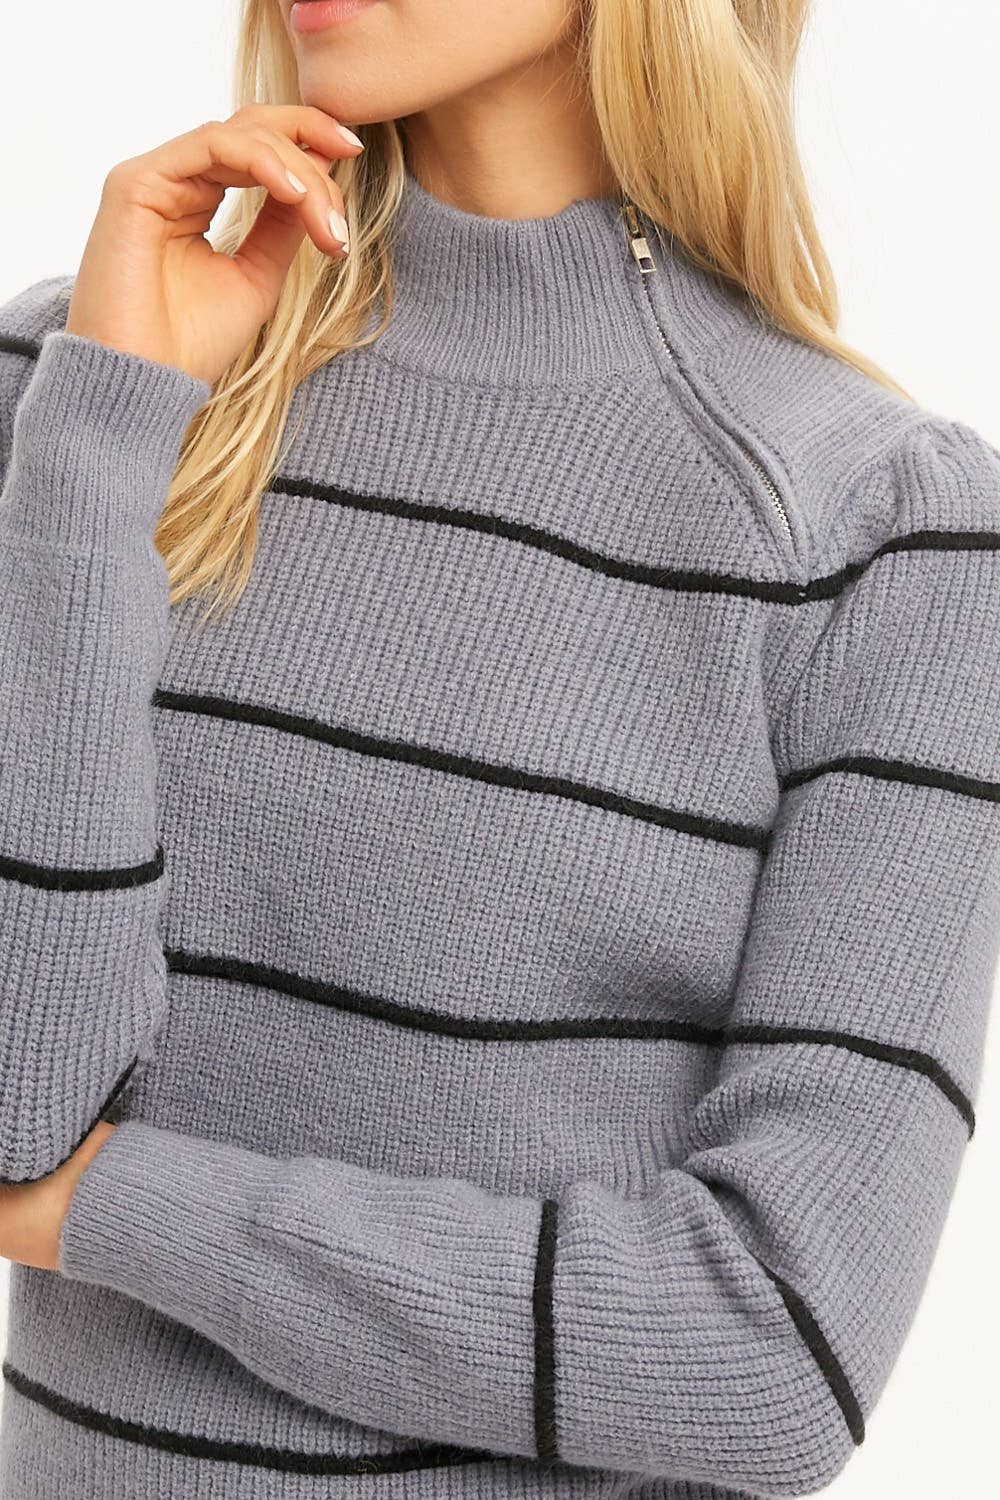 Blue Grey Mock Neck Sweater